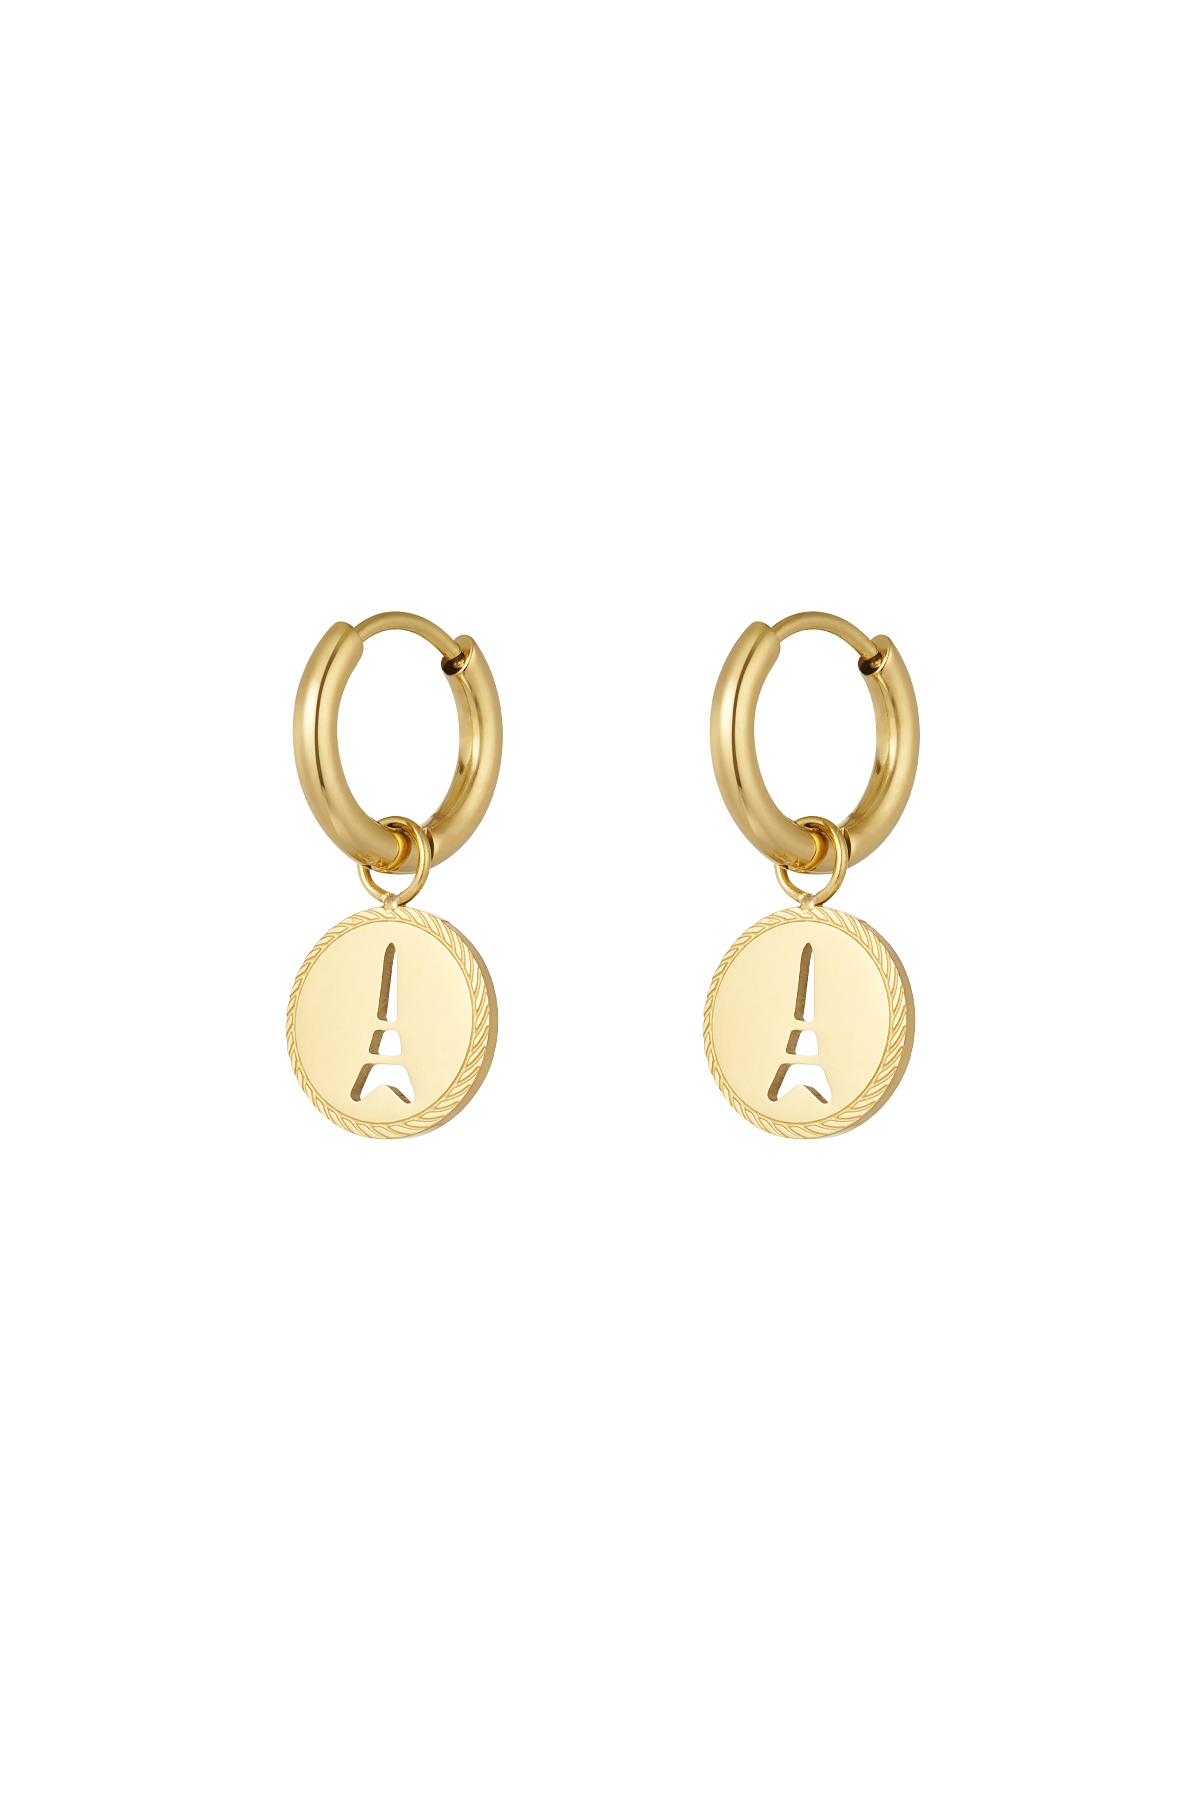 Eiffel Tower coin earrings - gold